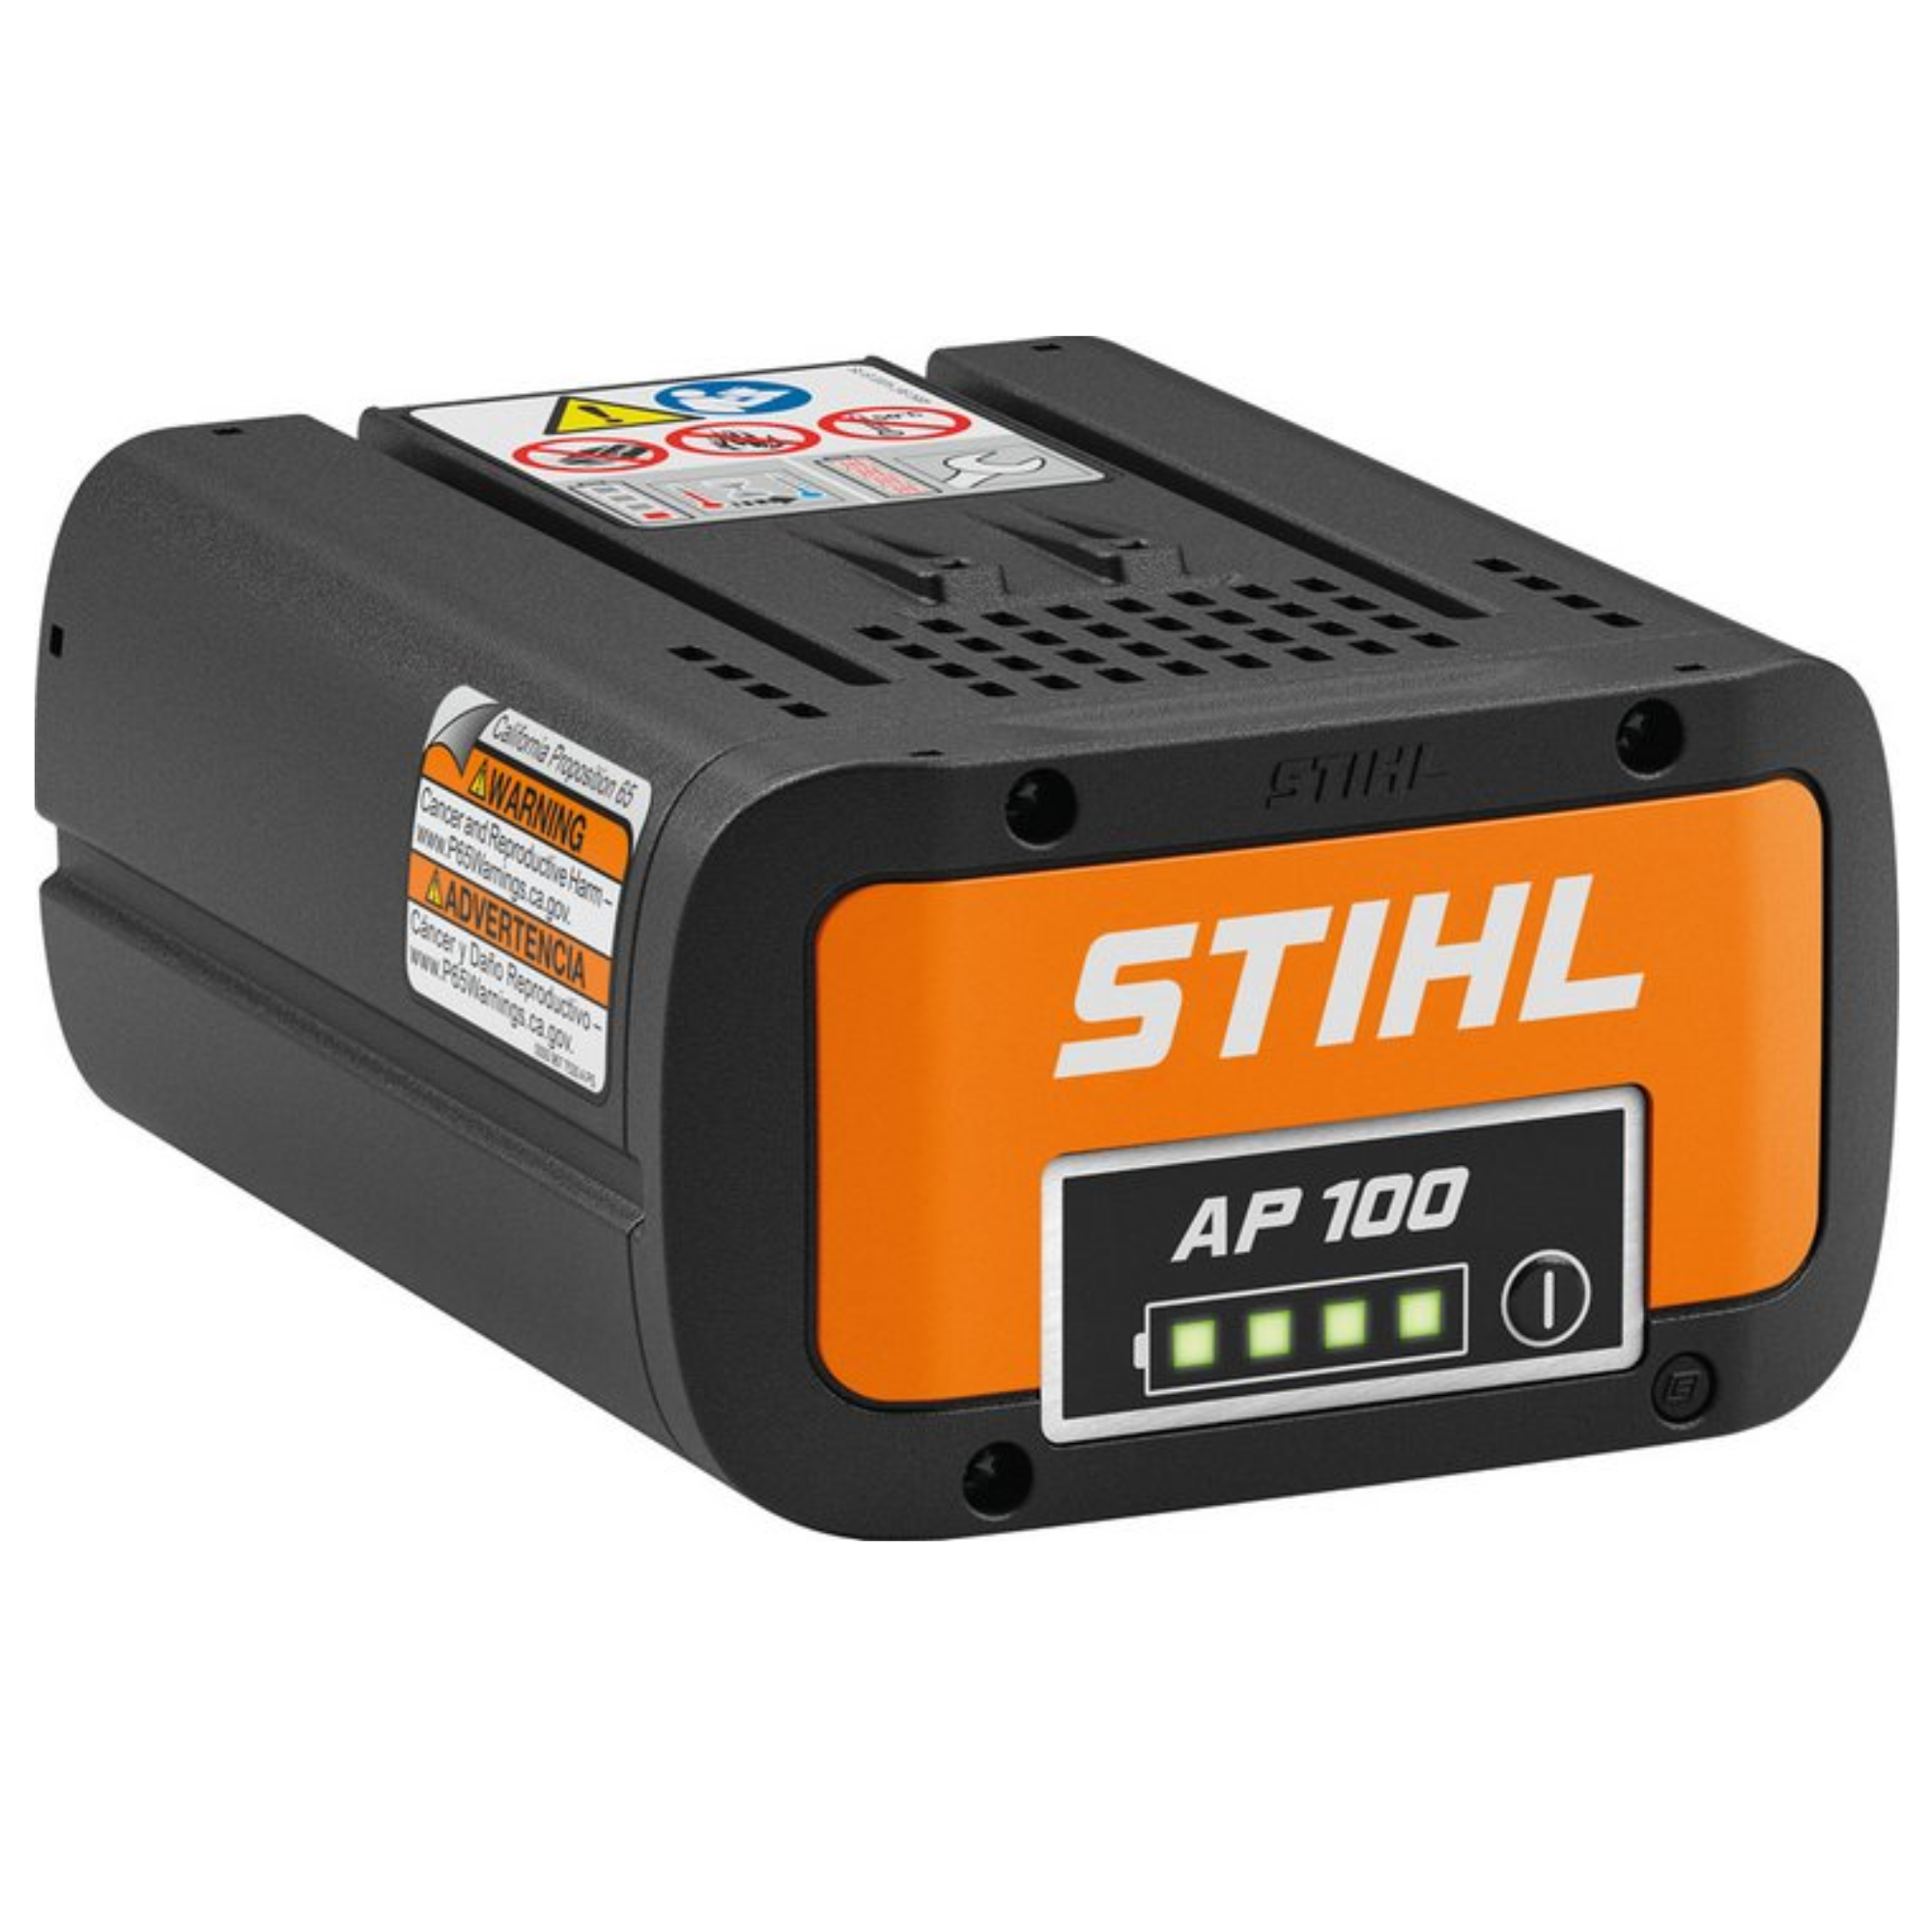 Stihl AP 100 36 volt 2.6 Ah Lithium-Ion Battery